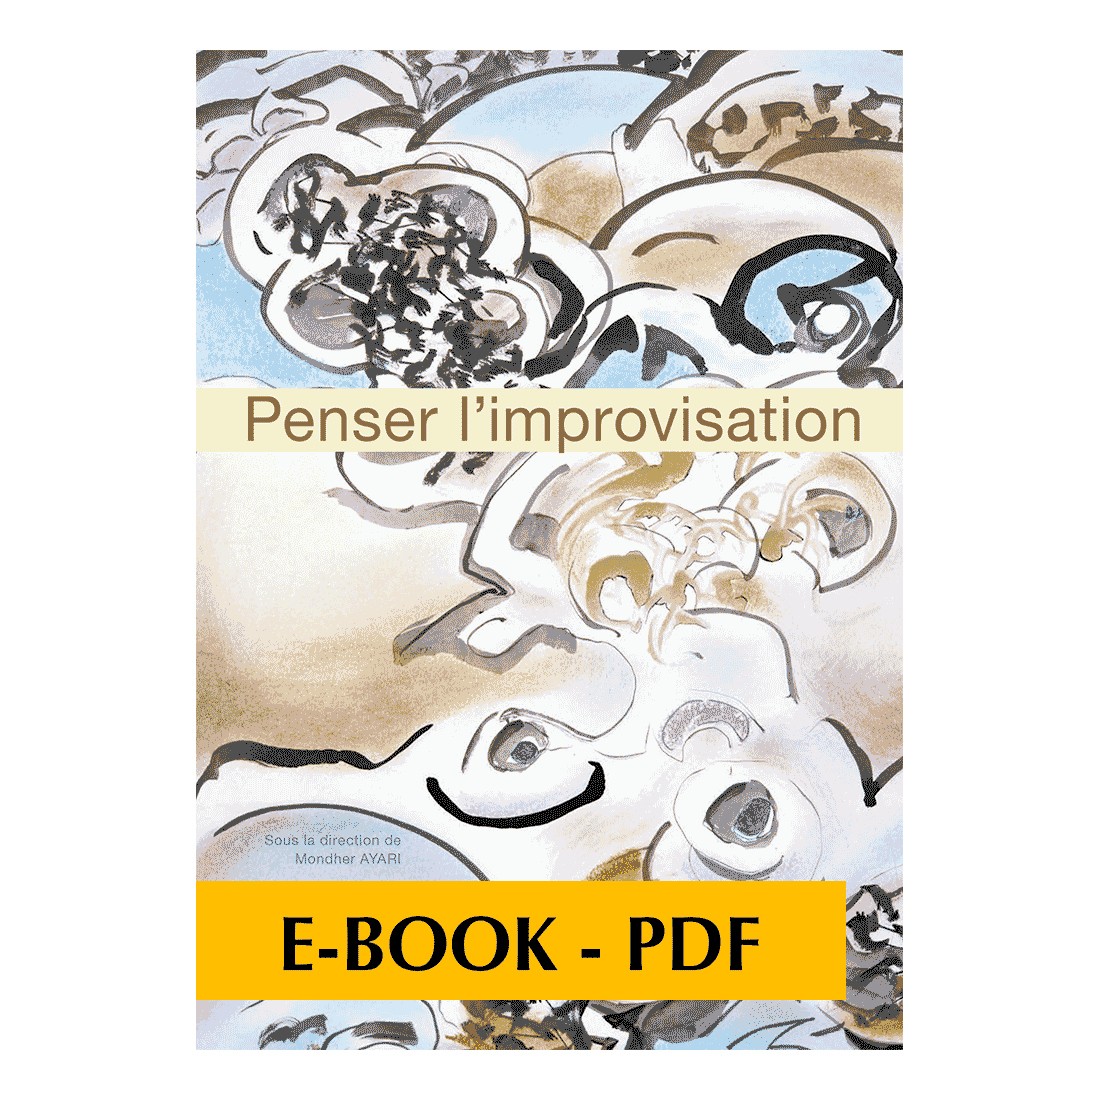 Penser l'improvisation - E-book PDF